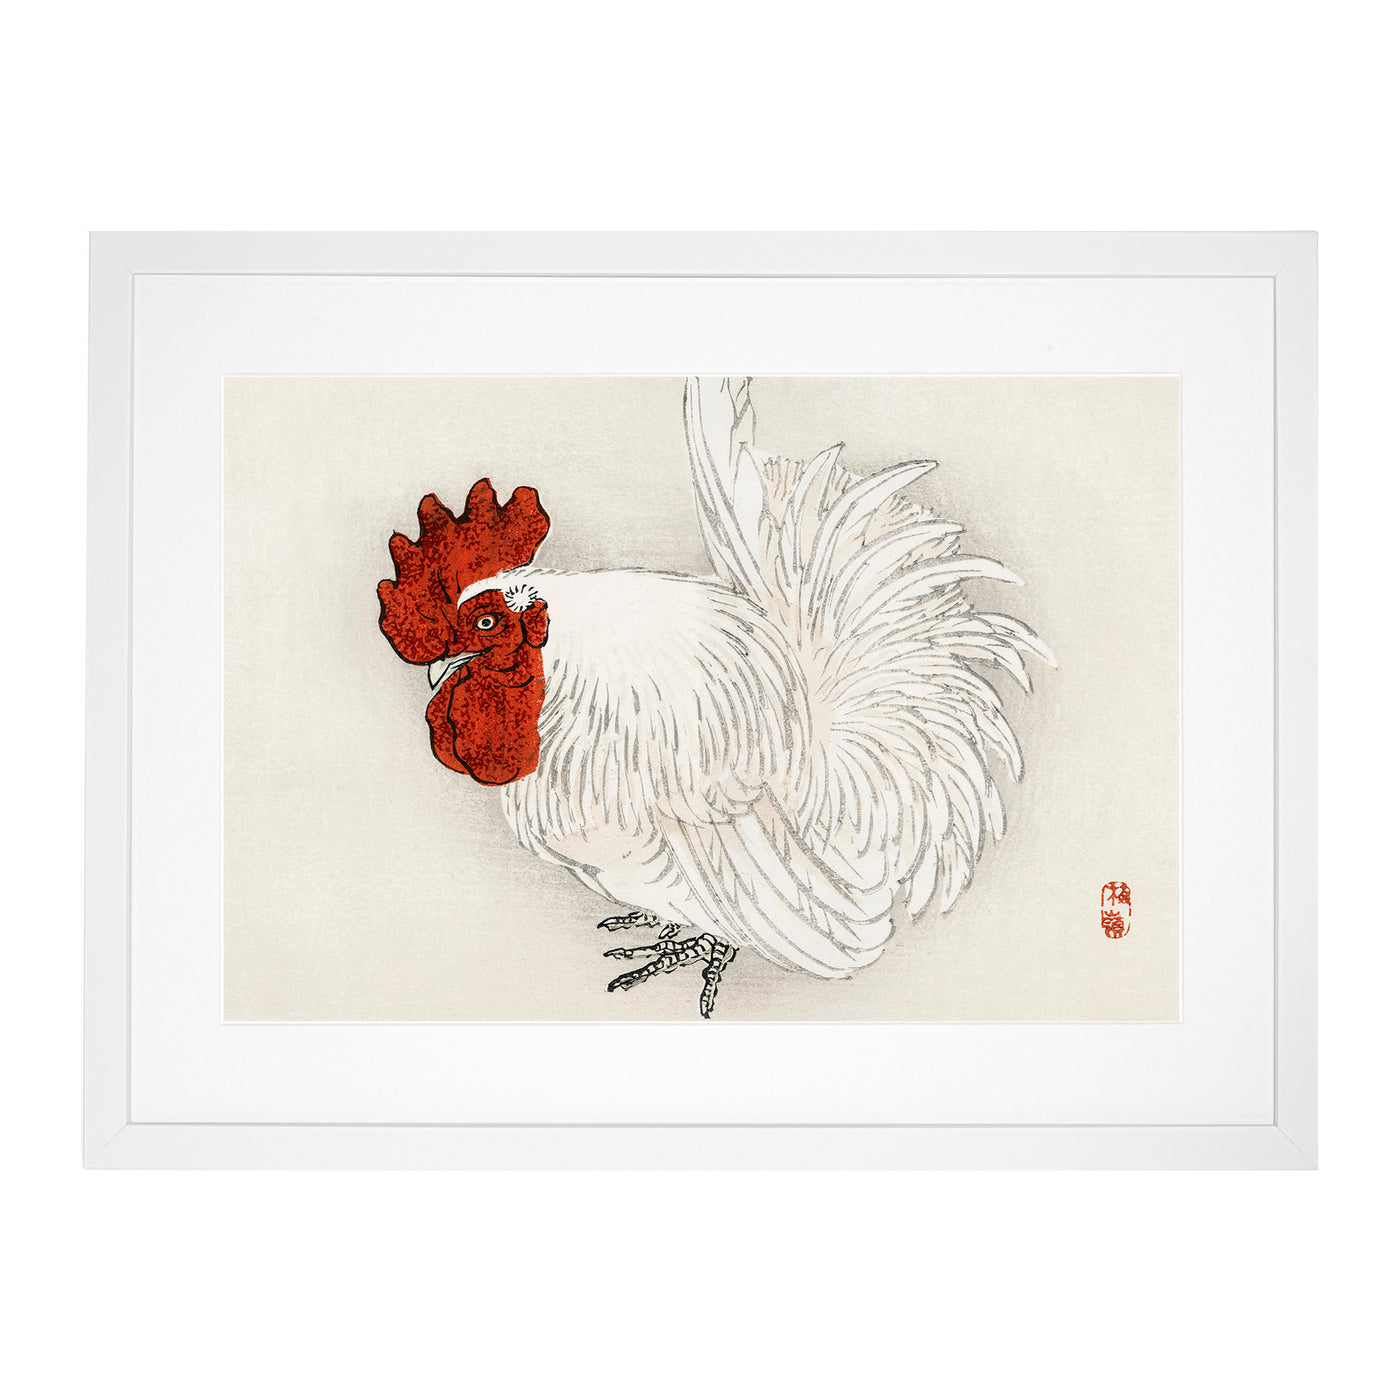 White Chicken By Kono Bairei